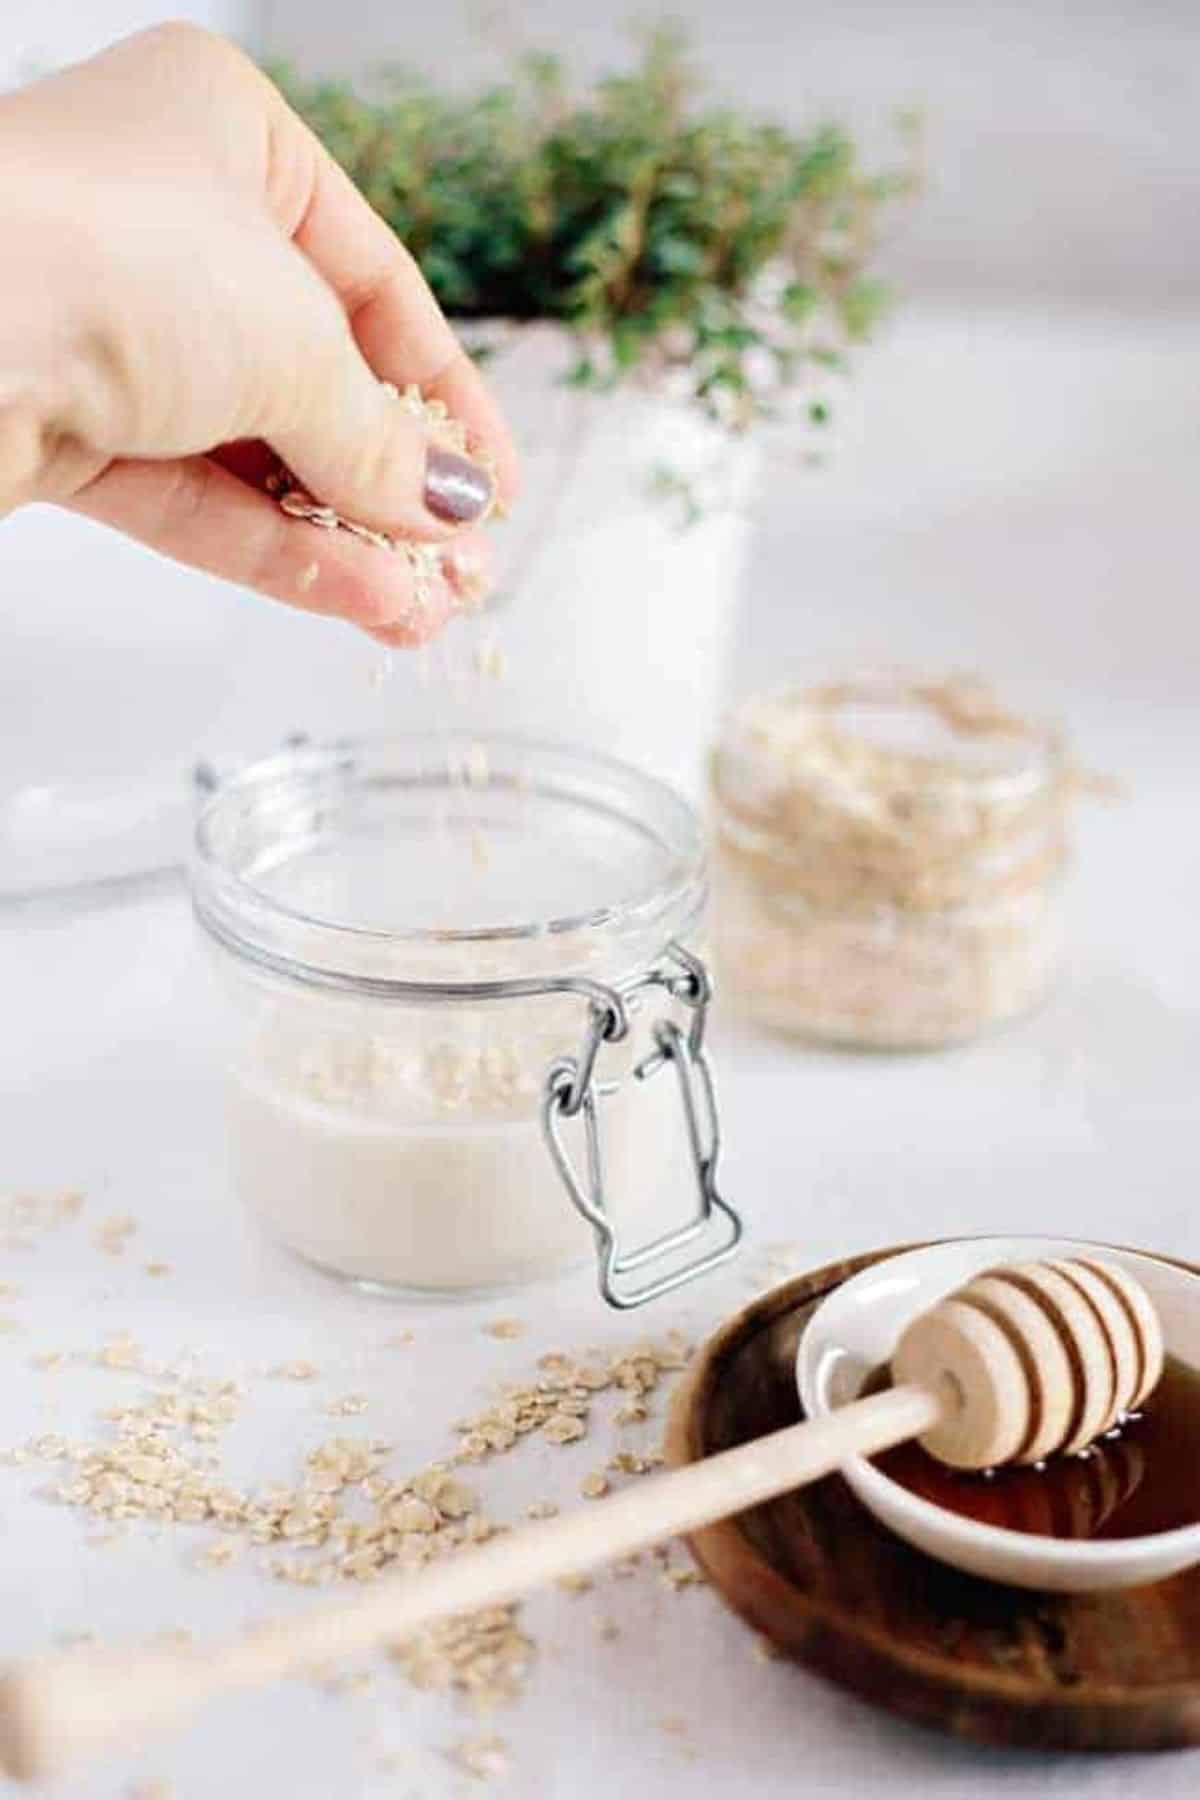 coconut milk bath recipe with oatmeal